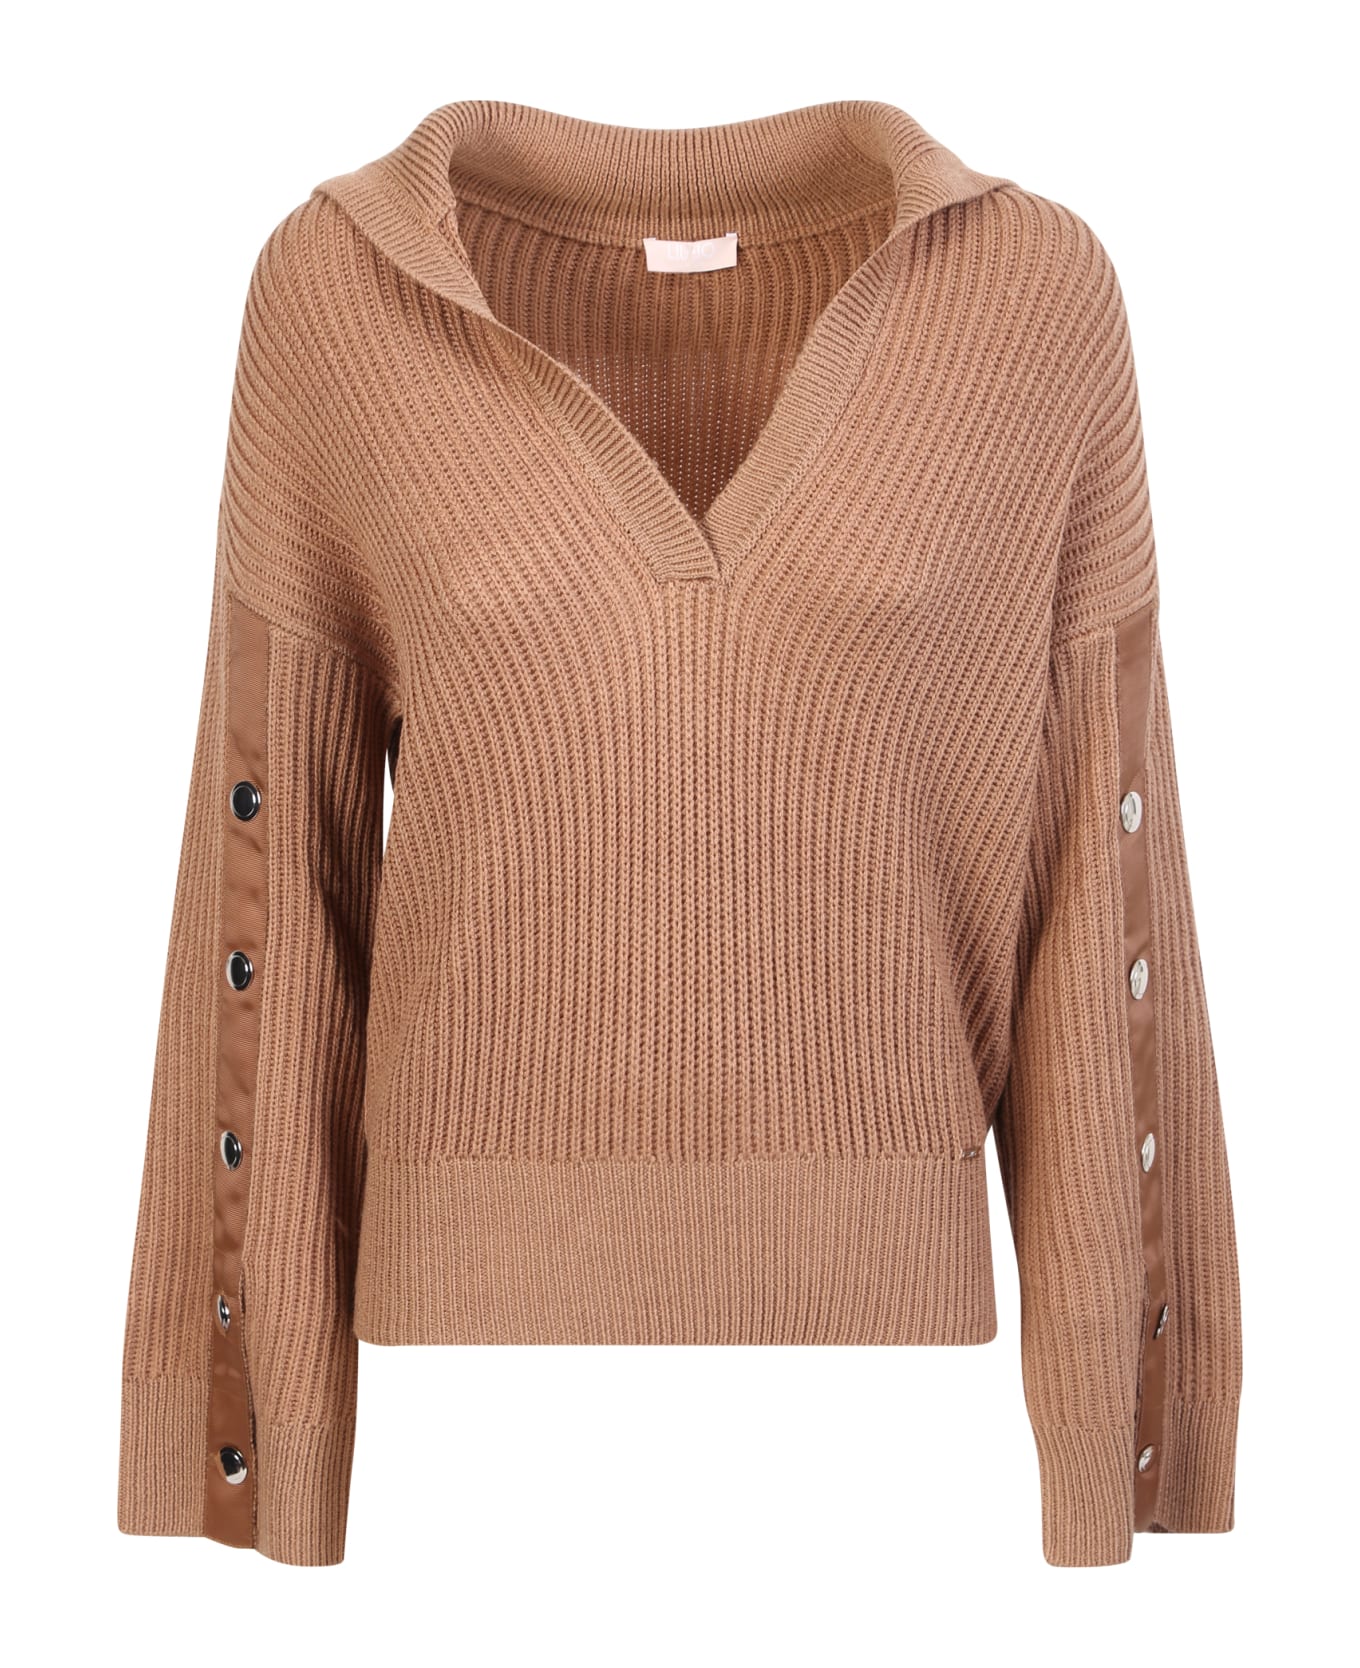 Liu-Jo Liu Jo Camel Knit Sweater With Gold Buttons - Brown